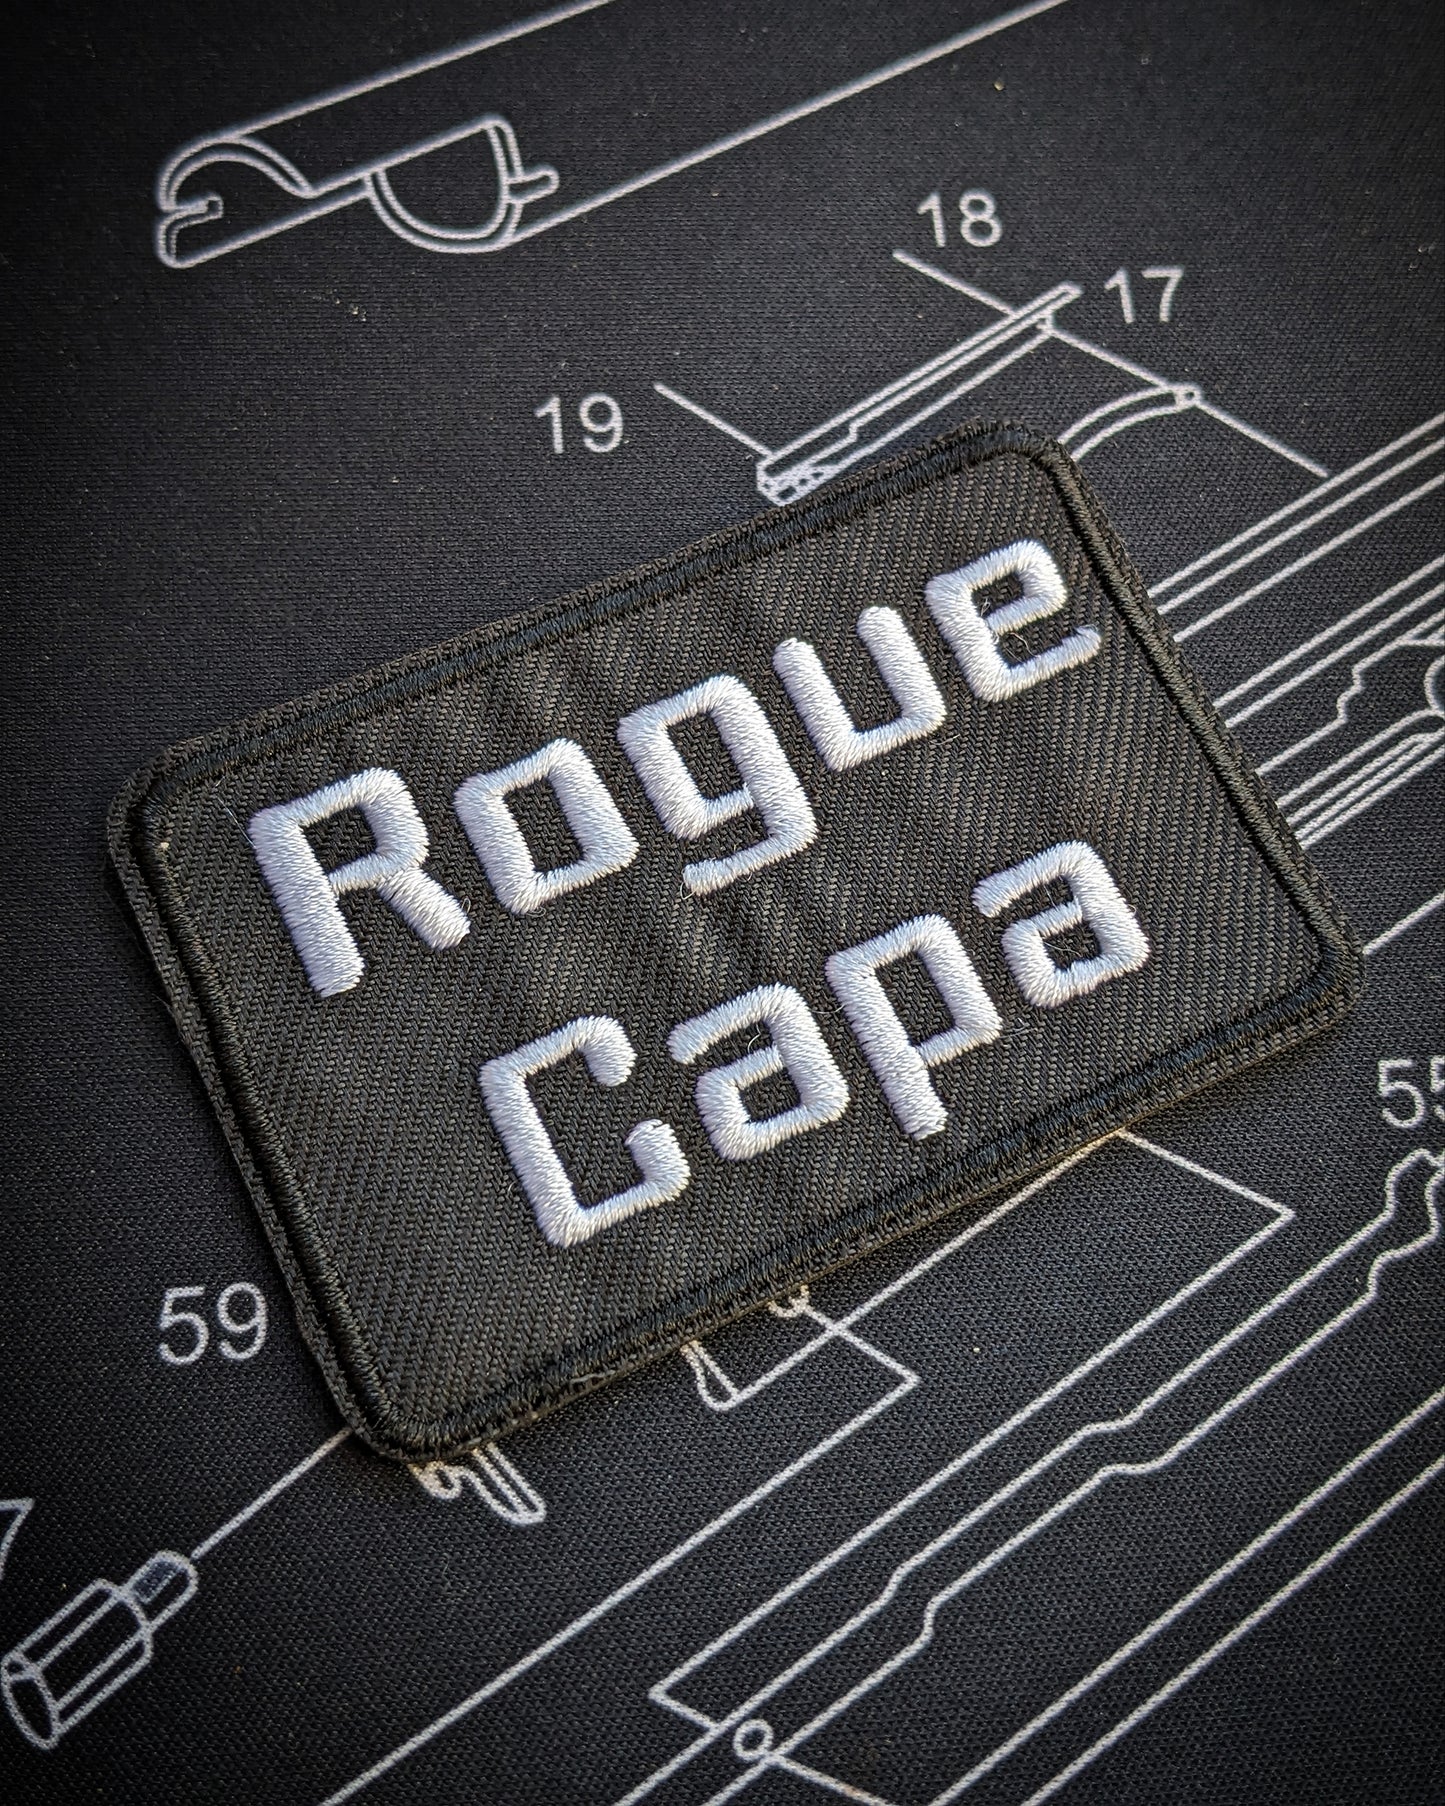 Rogue Capa Fabric Patch